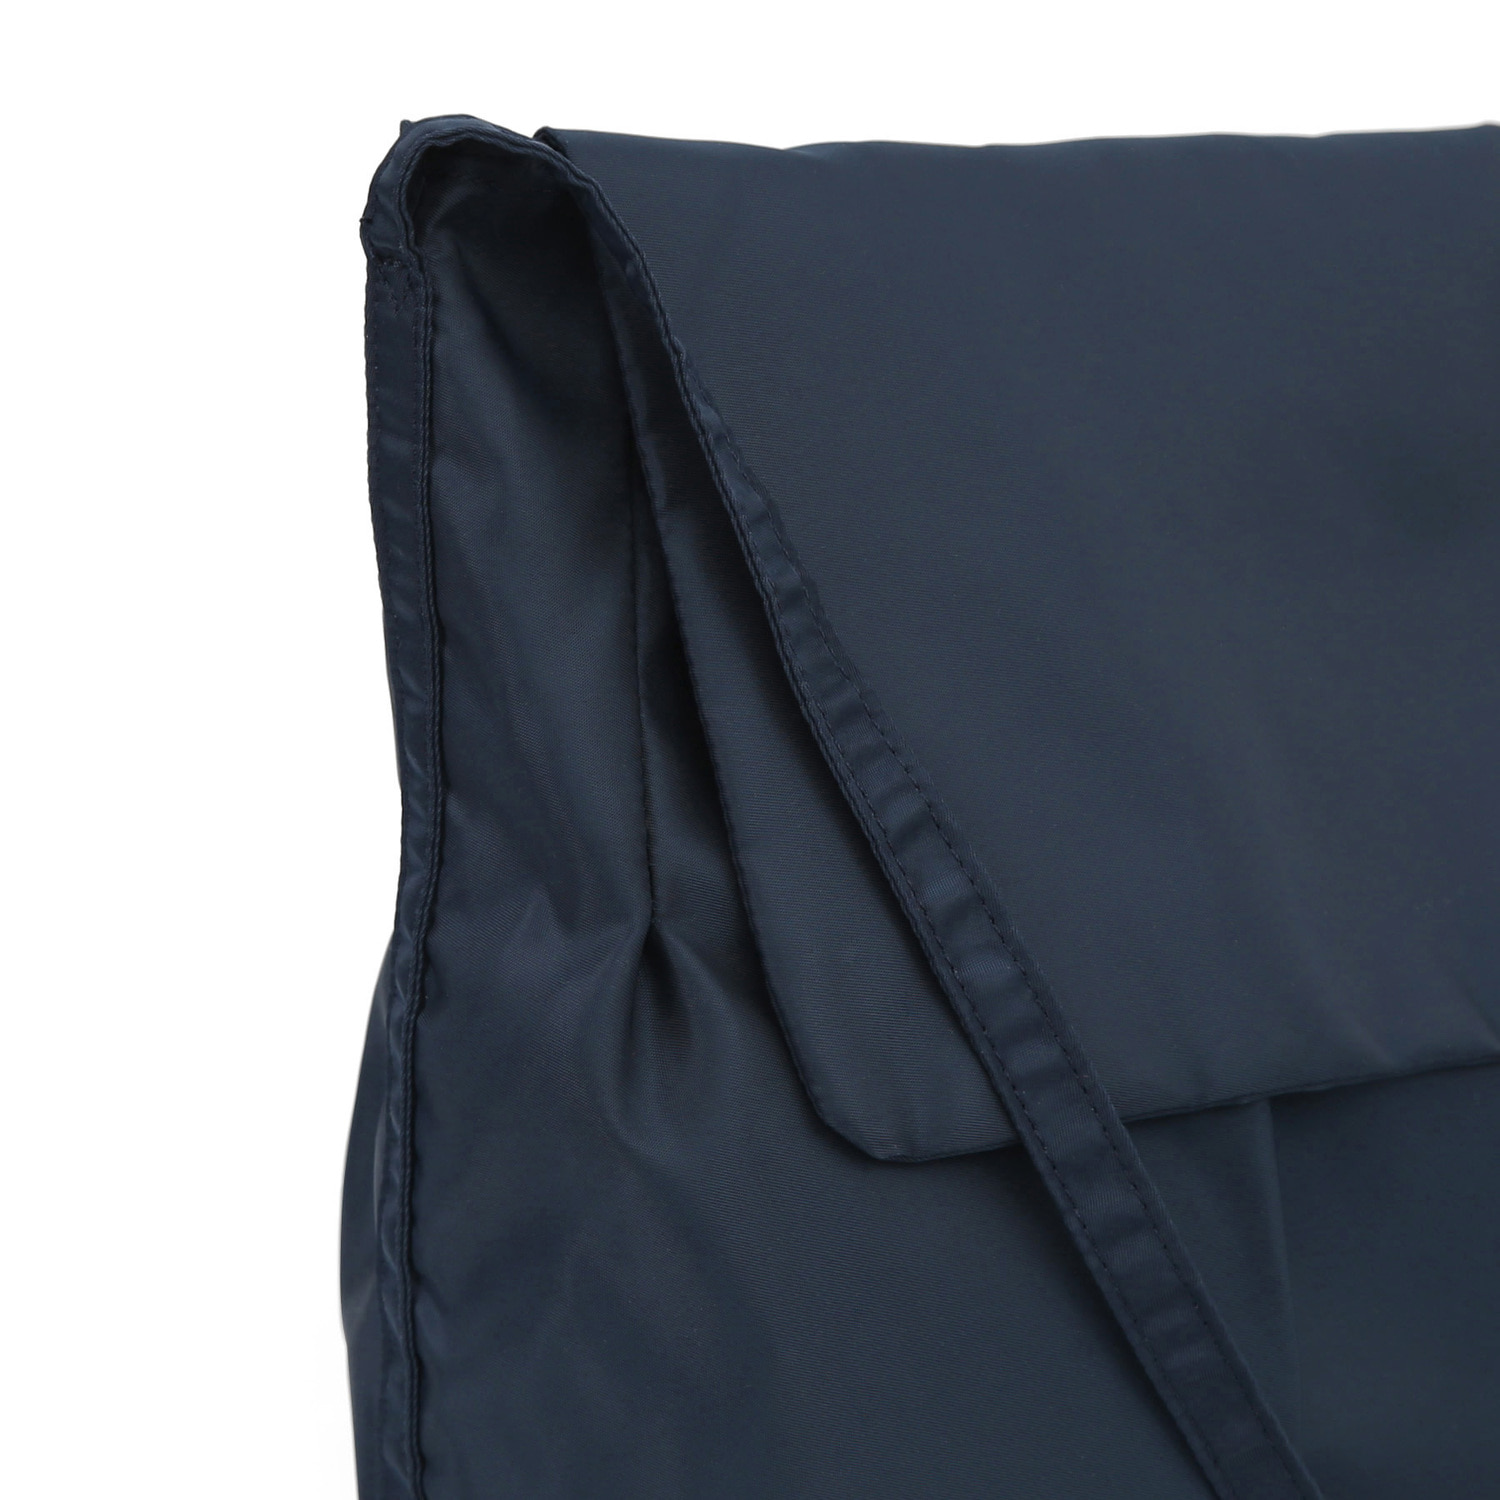 UNDERCONTROL Ladder Bag Wrinkle N Twill Navy | Shoulder Bags for Women ...